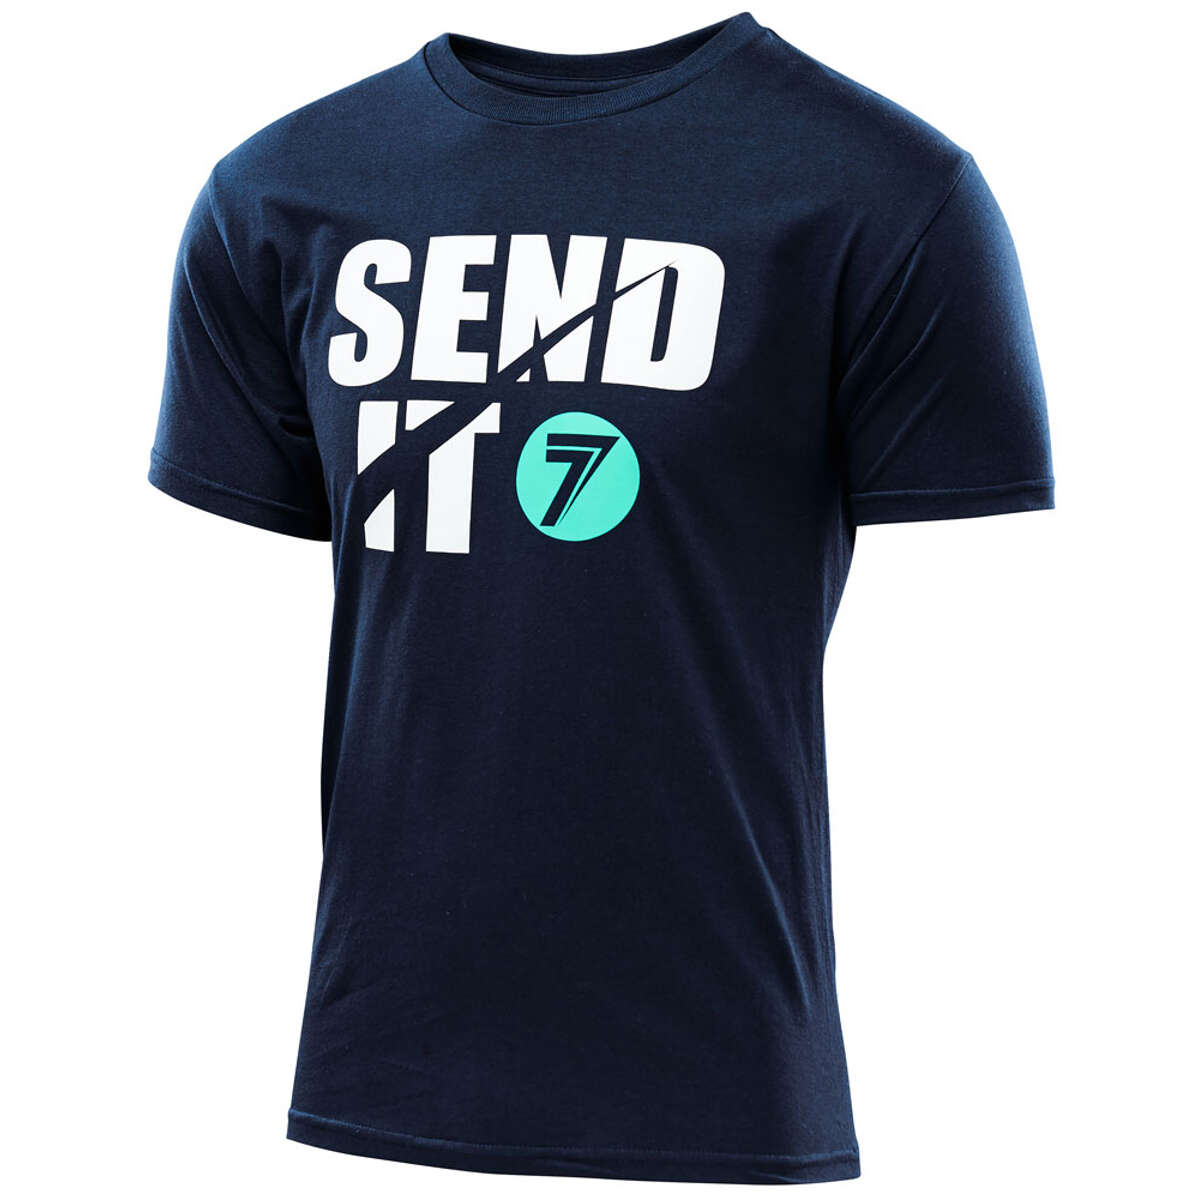 Seven MX T-Shirt Send It Navy